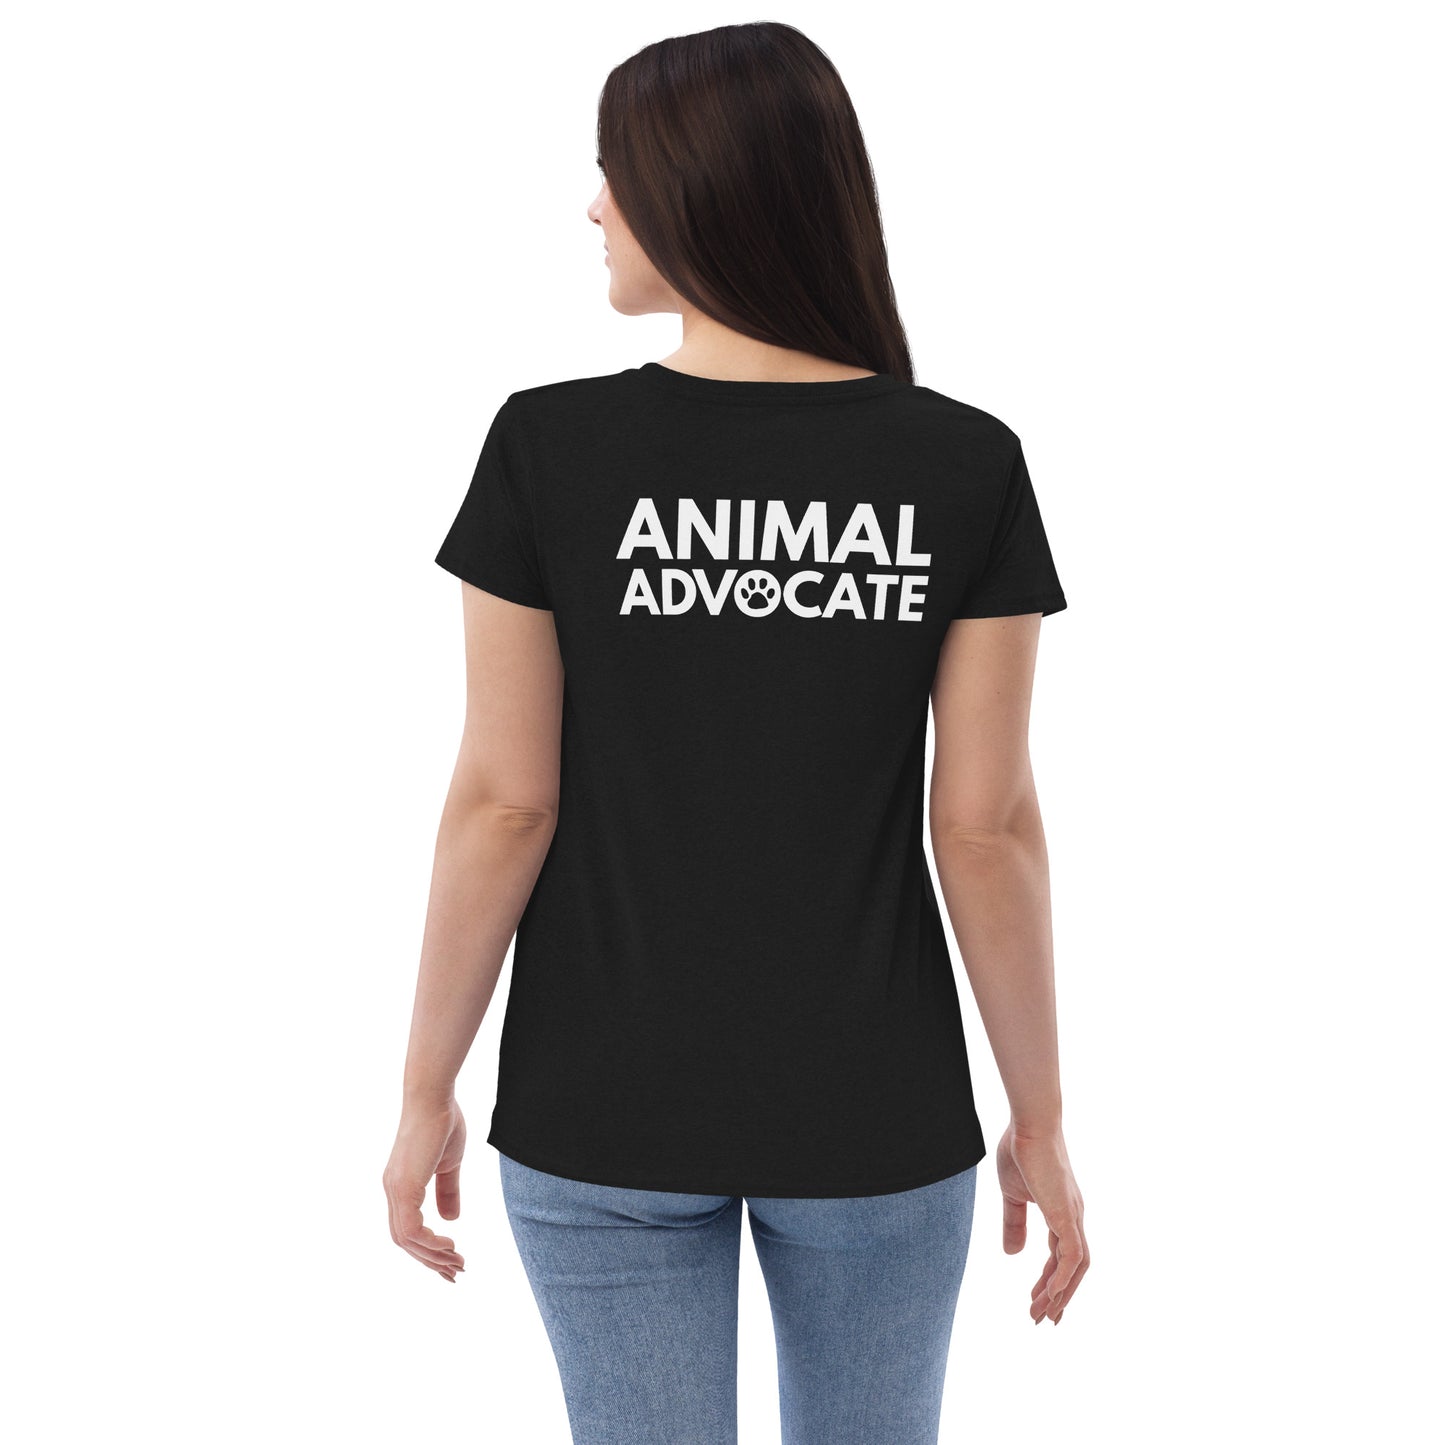 Animal Advocate - Women’s recycled back print v-neck t-shirt